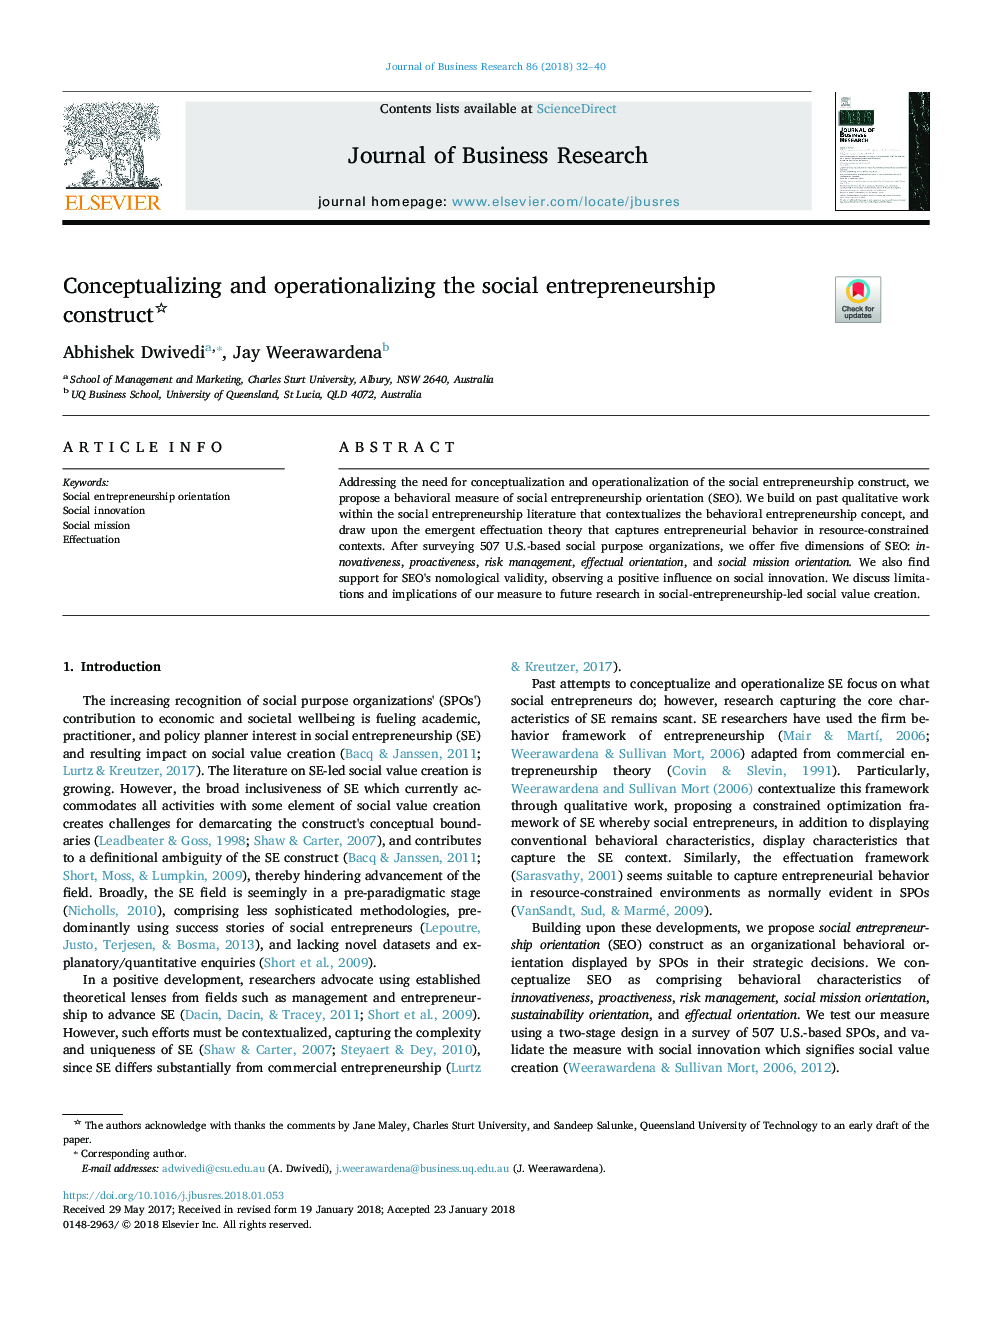 Conceptualizing and operationalizing the social entrepreneurship construct